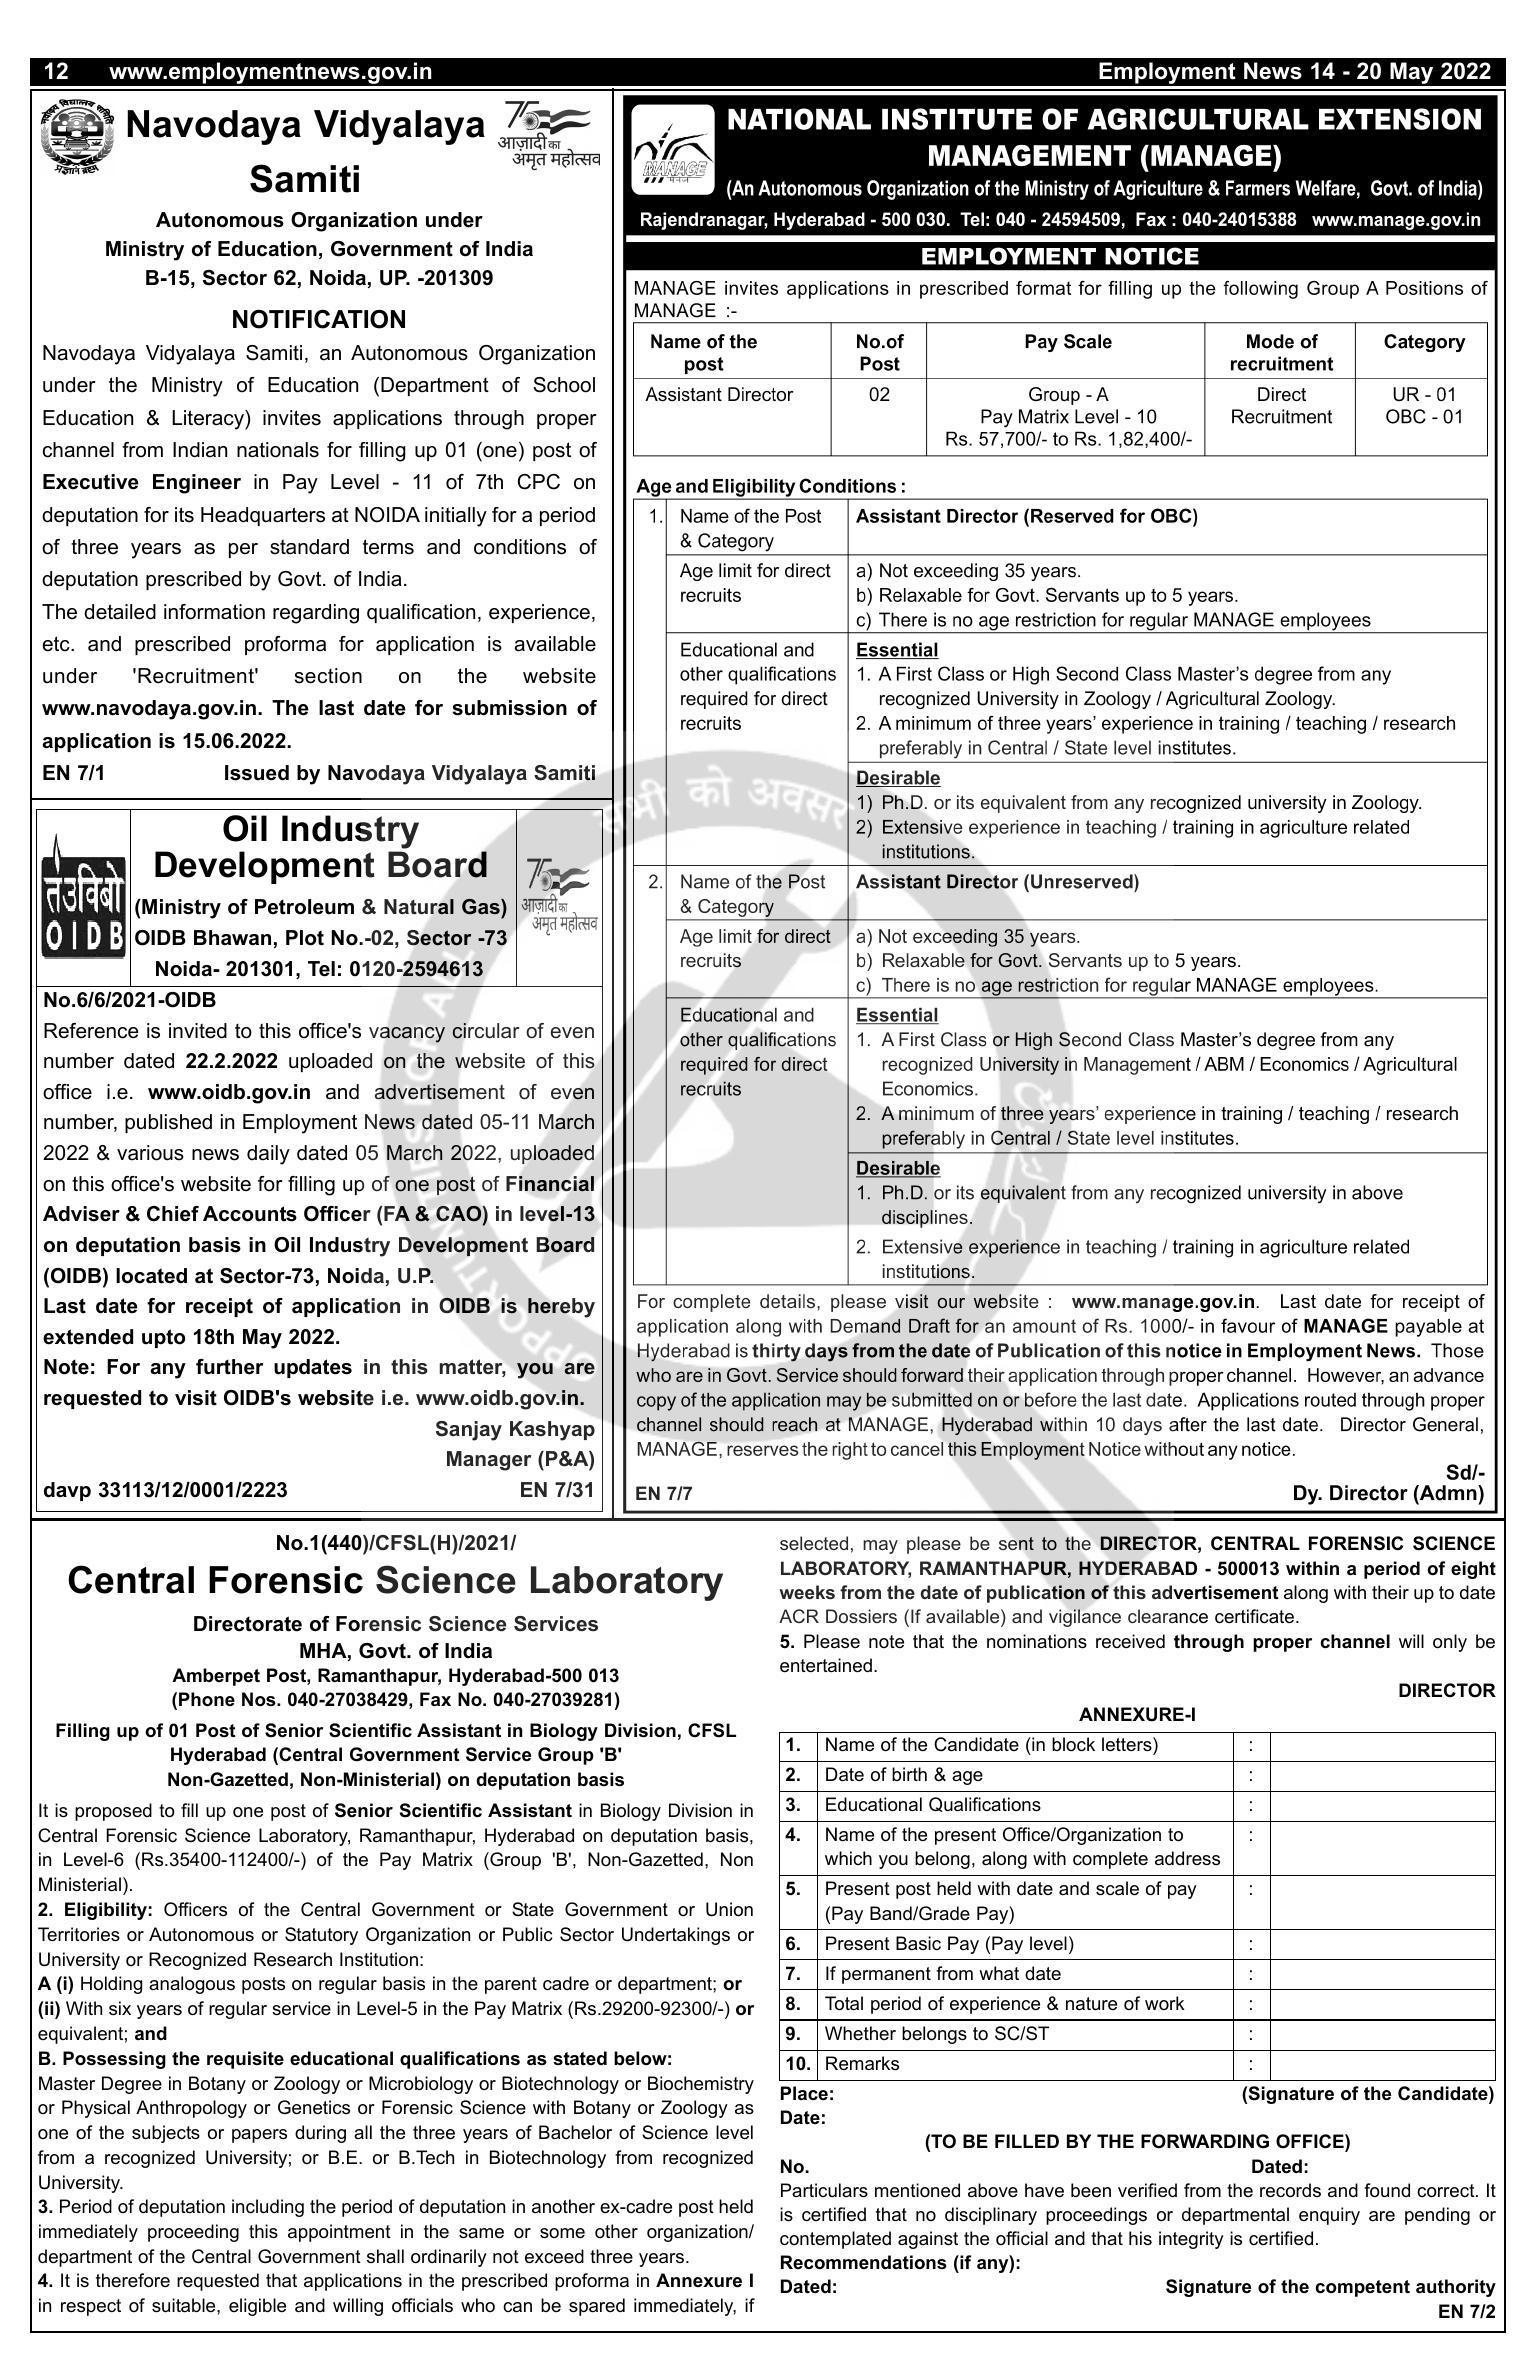 CFSL Recruitment 2022 for Senior Scientific Assistant - Page 1